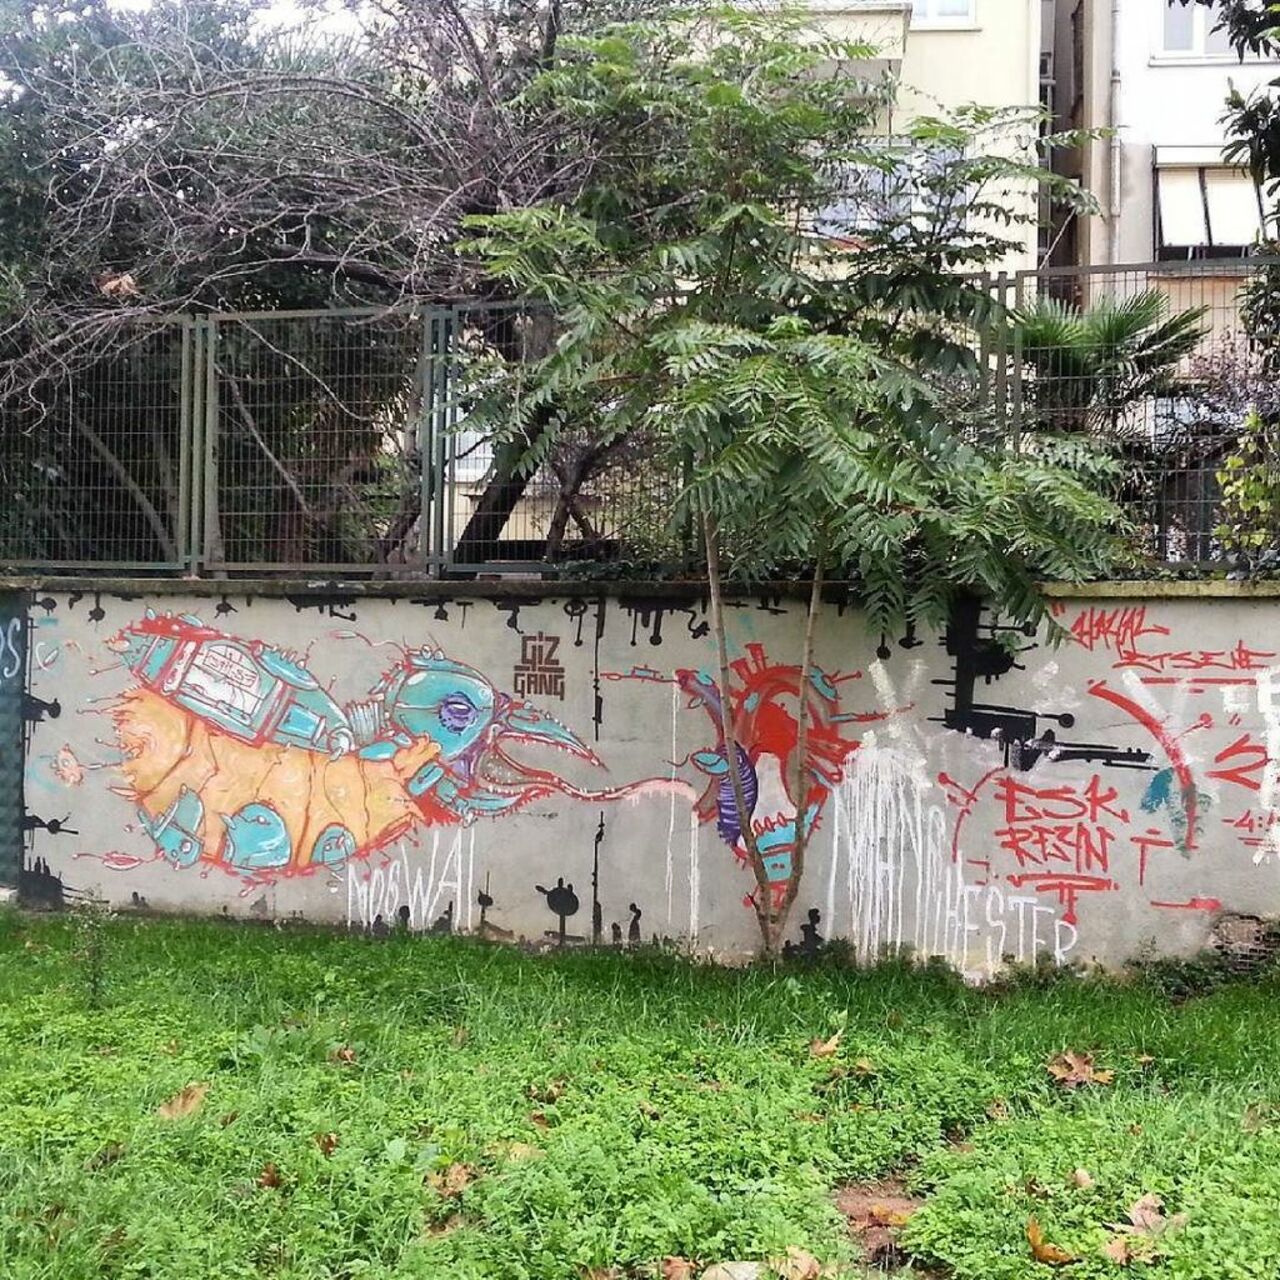 #streetartkadikoy #streetart #graffiti #publicart #urbanart #sokaksanatı #streetartistanbul #istanbulstreetart #gra… https://t.co/E9FMY6hvCH